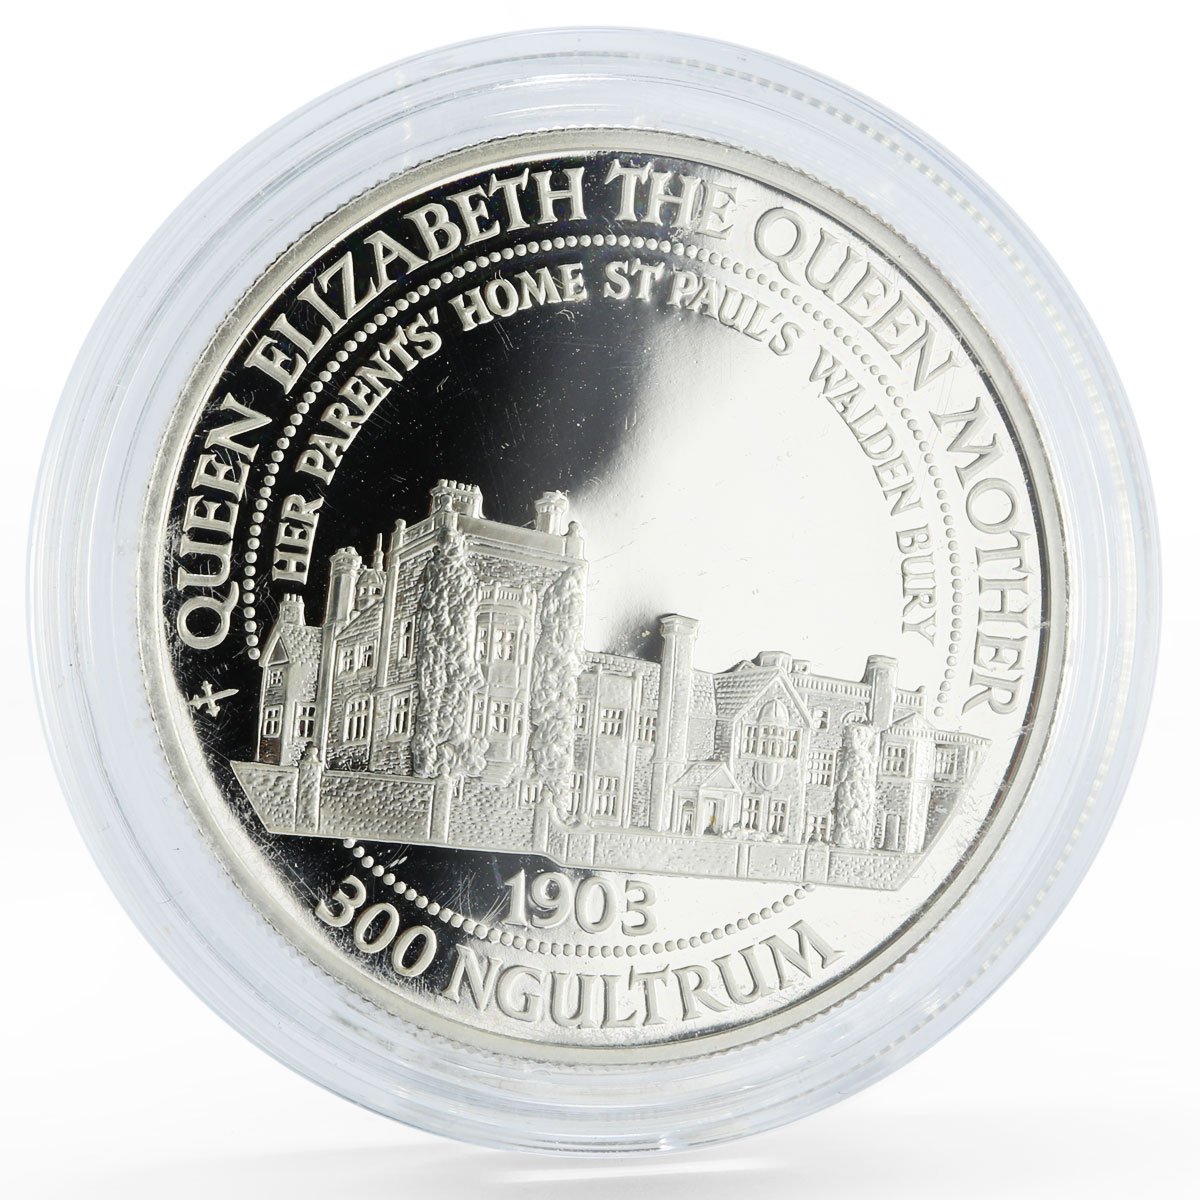 Bhutan 300 ngultrums St. Paul's Walden Bury Palace proof silver coin 1995